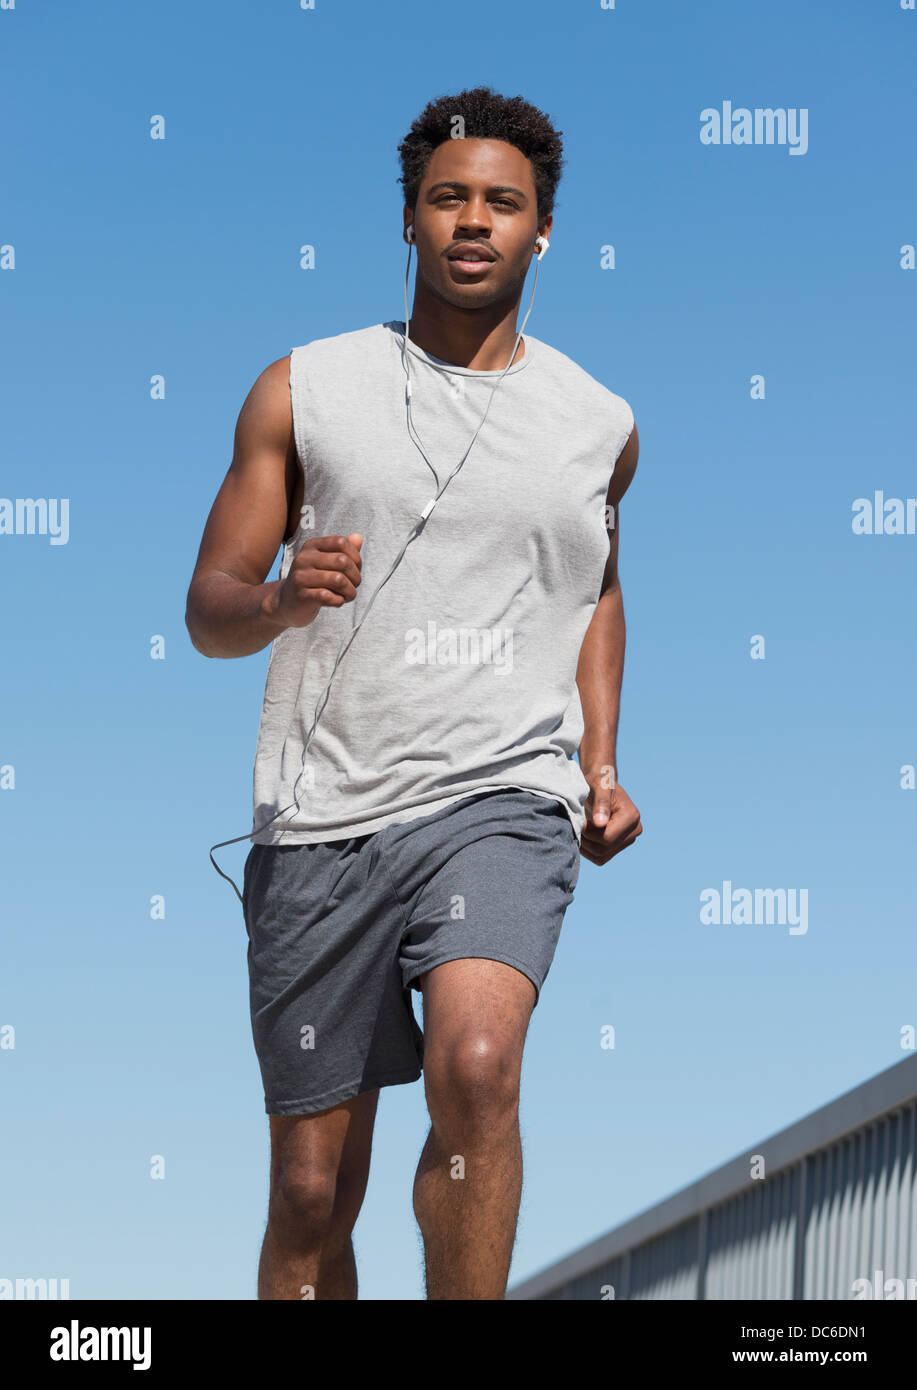 Man jogging Stock Photo